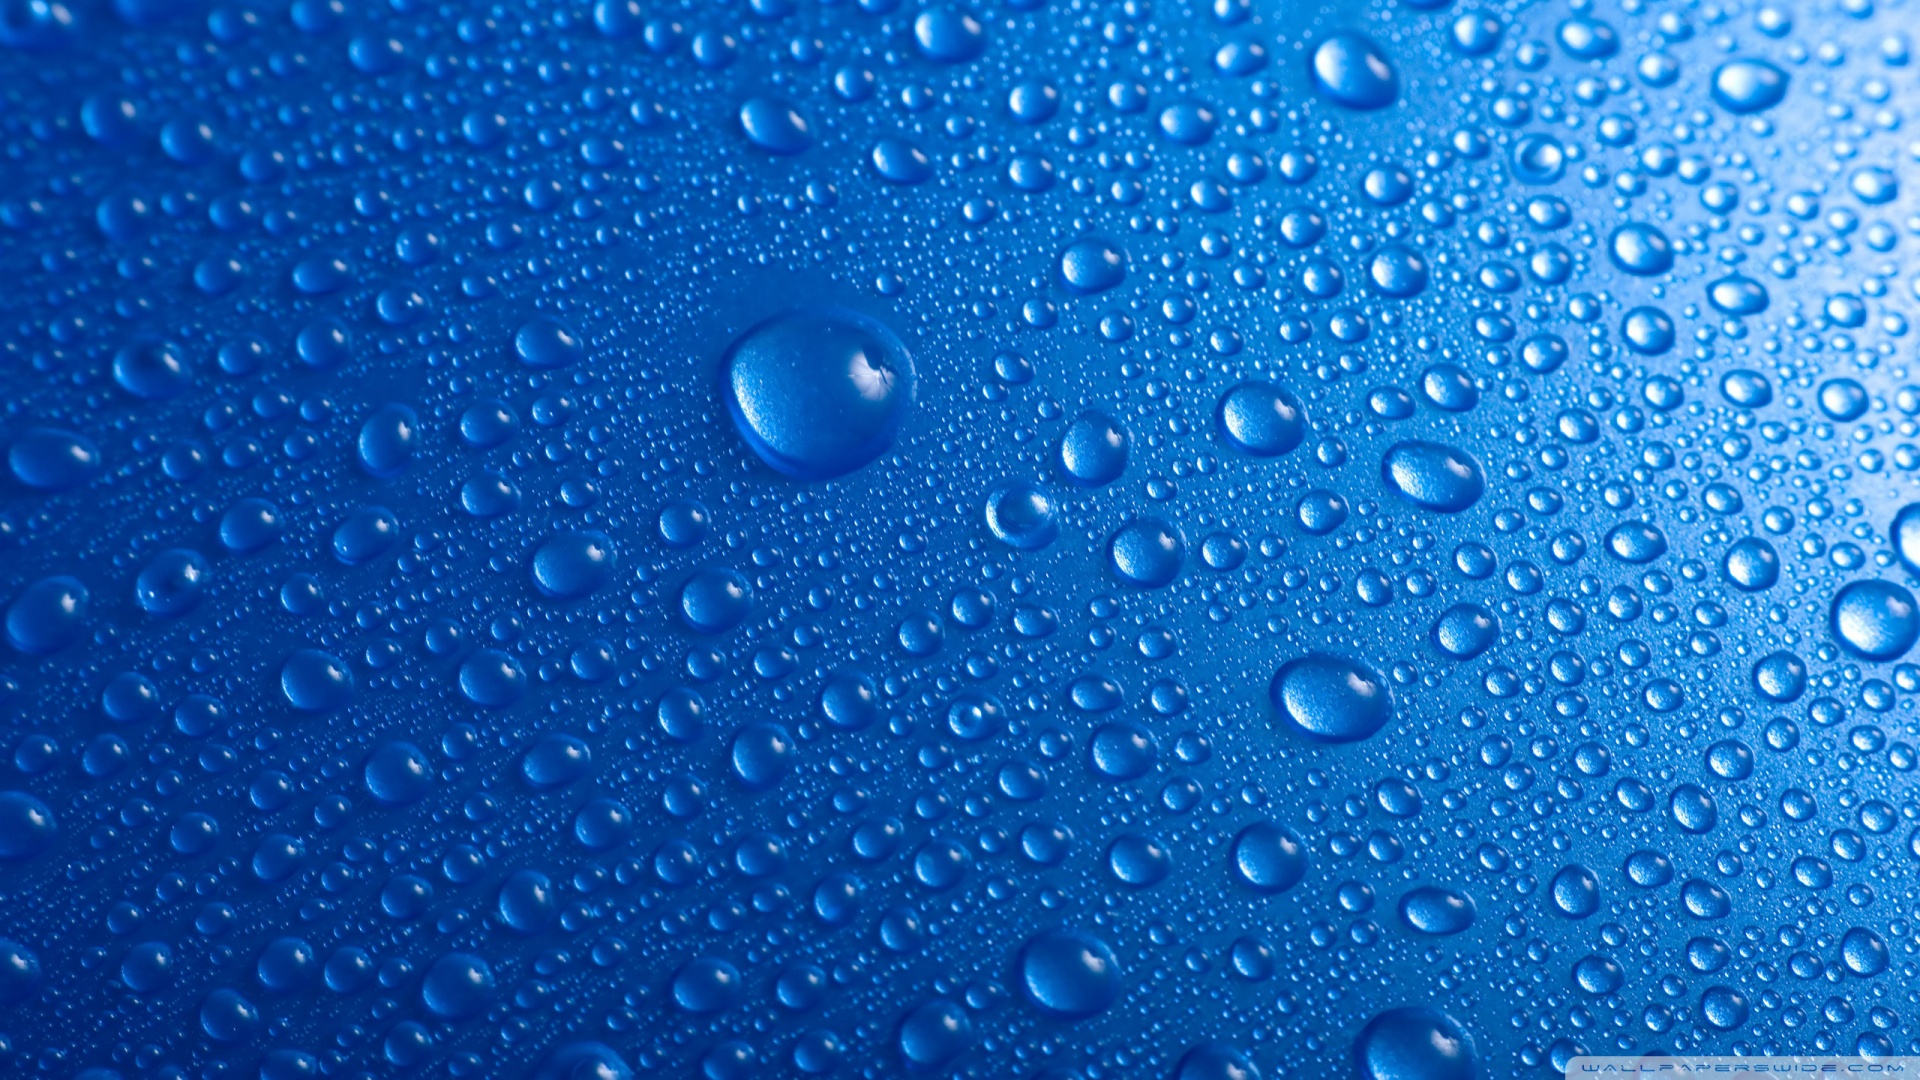 Water Droplet Wallpaper 1920x1080 Water Droplet